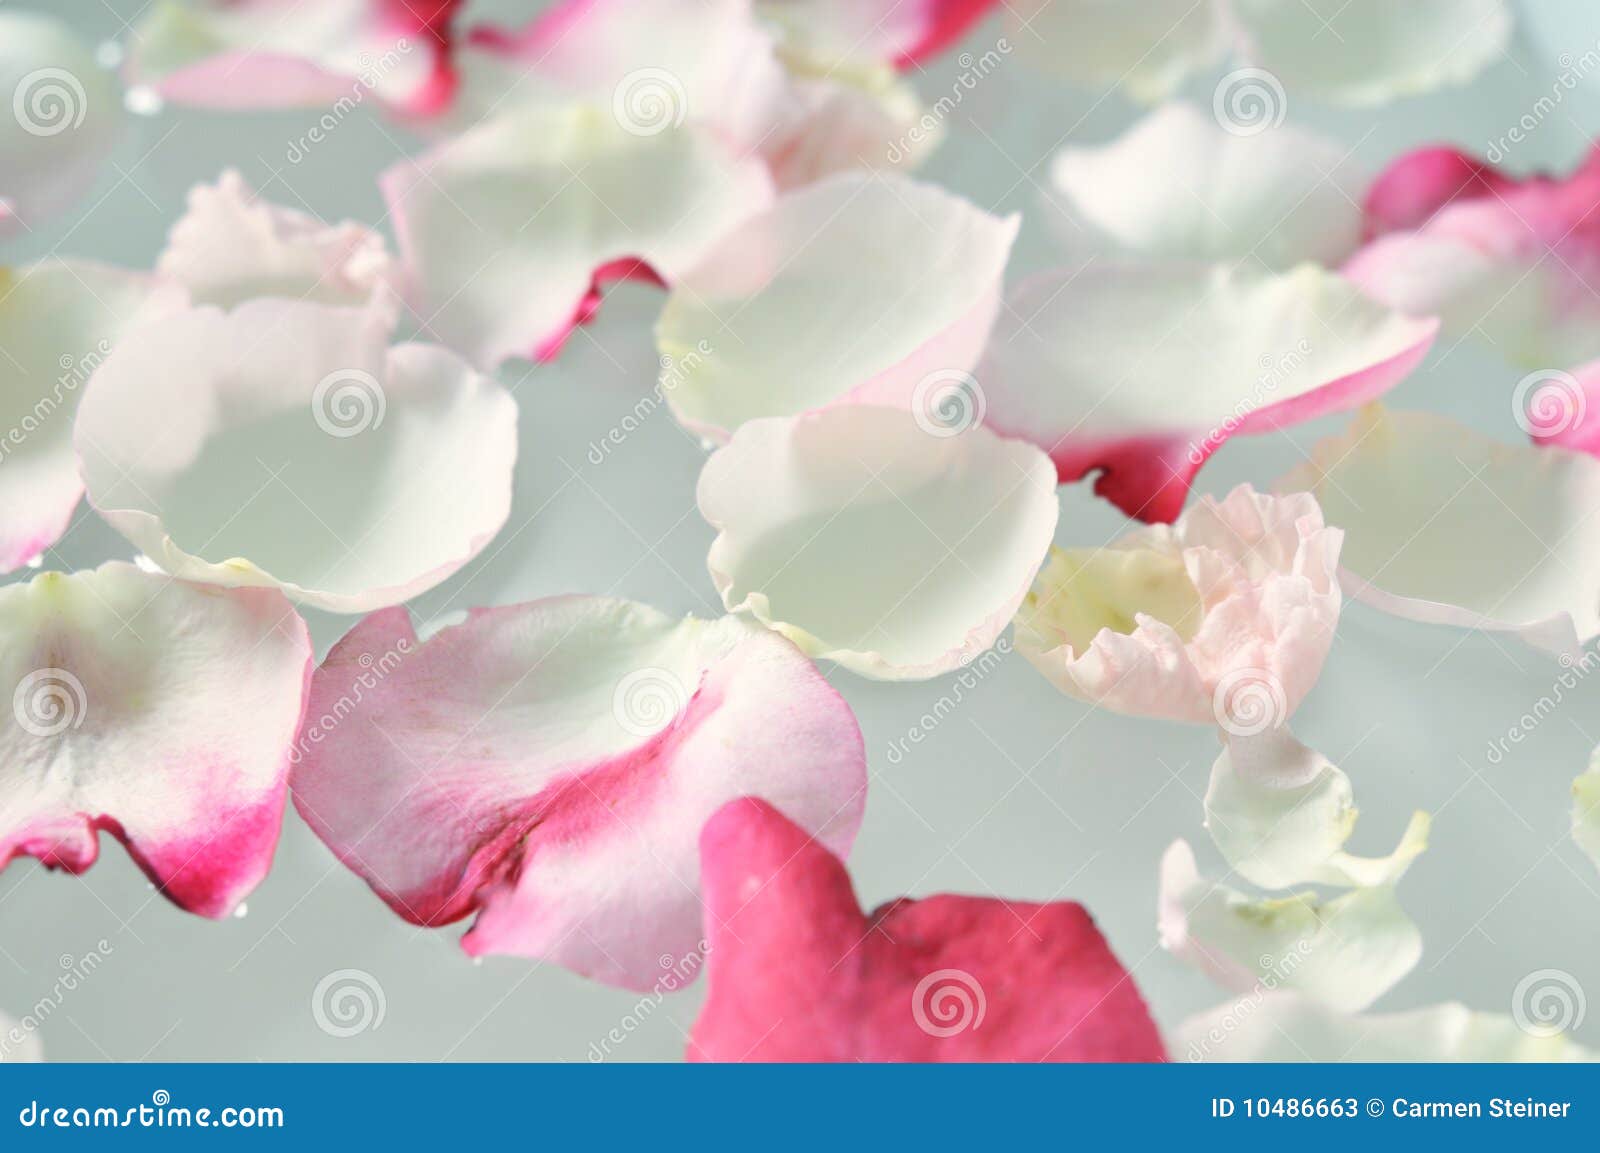 floating rose petals